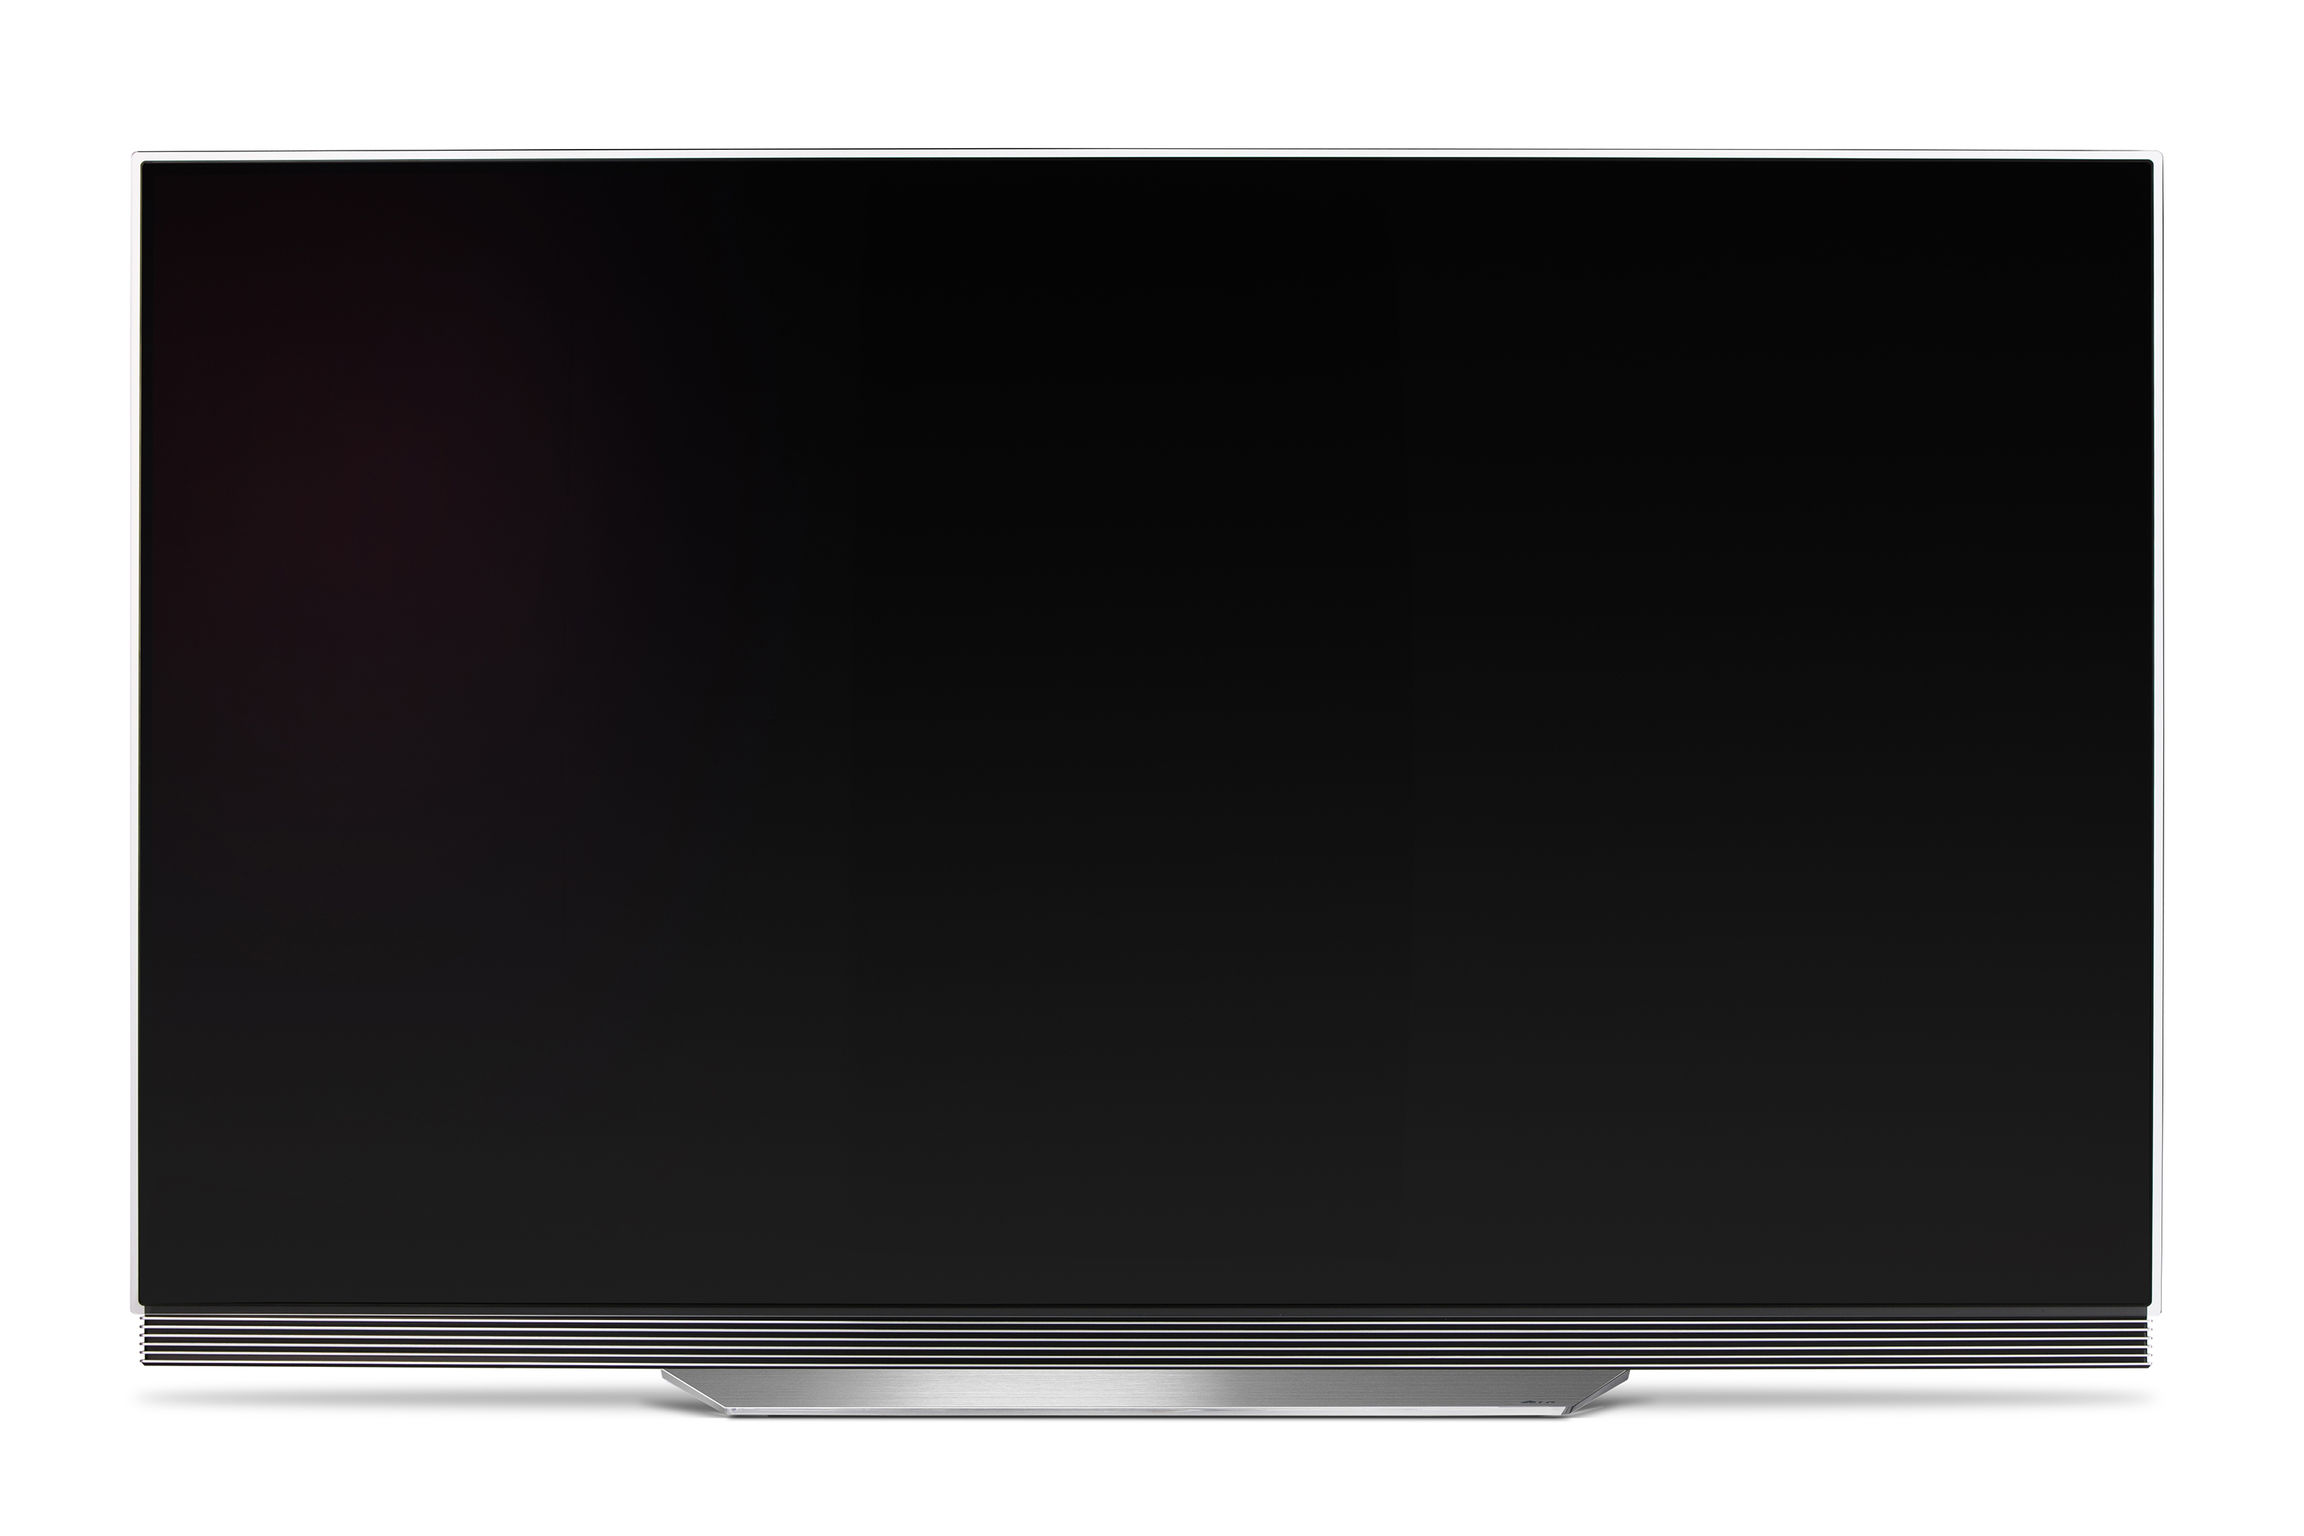 LG OLED TV (E7)